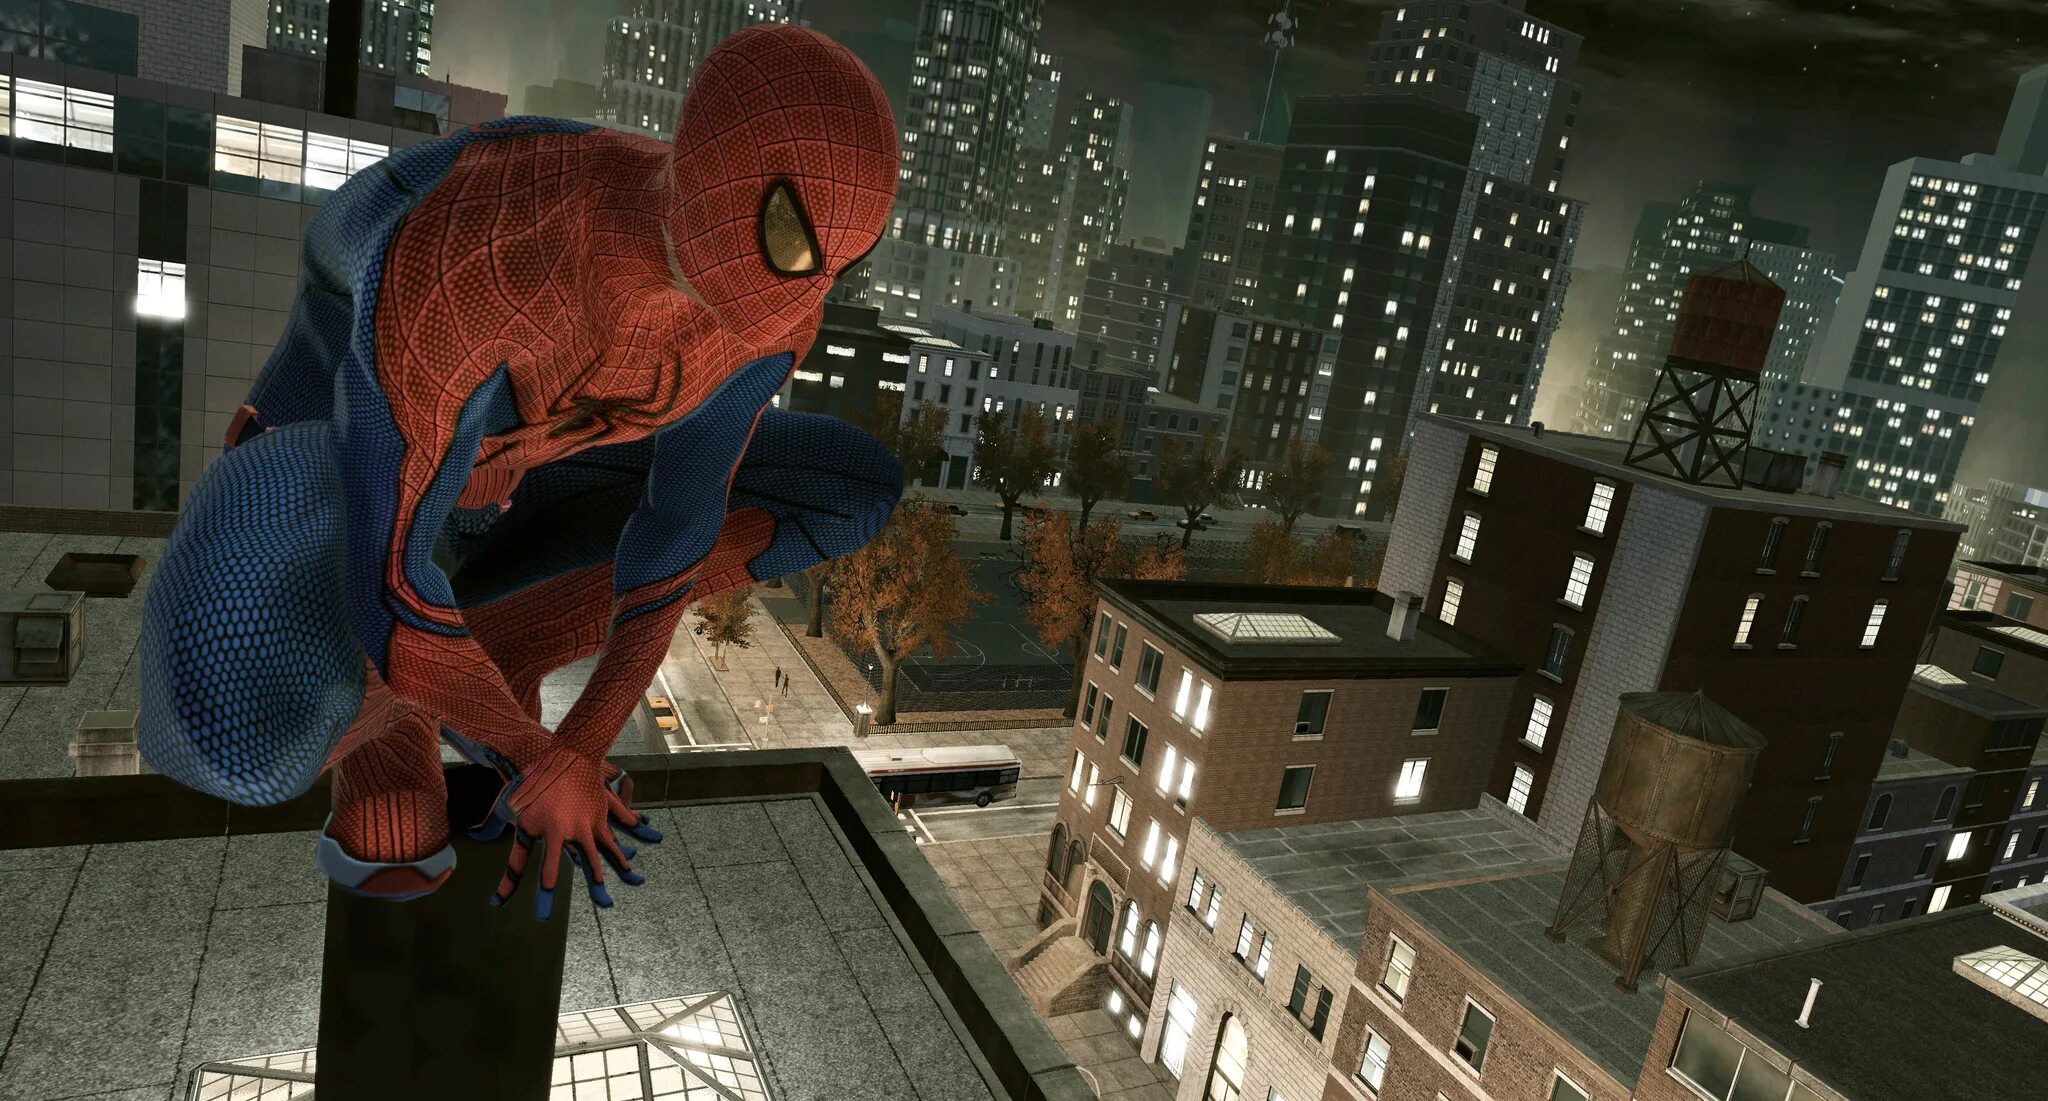 Spider man игра 2012. The amazing Spider-man 2 игра. Человек паук амазинг игра. The amazing Spider-man (игра, 2012). Человек паук амазинг 2.